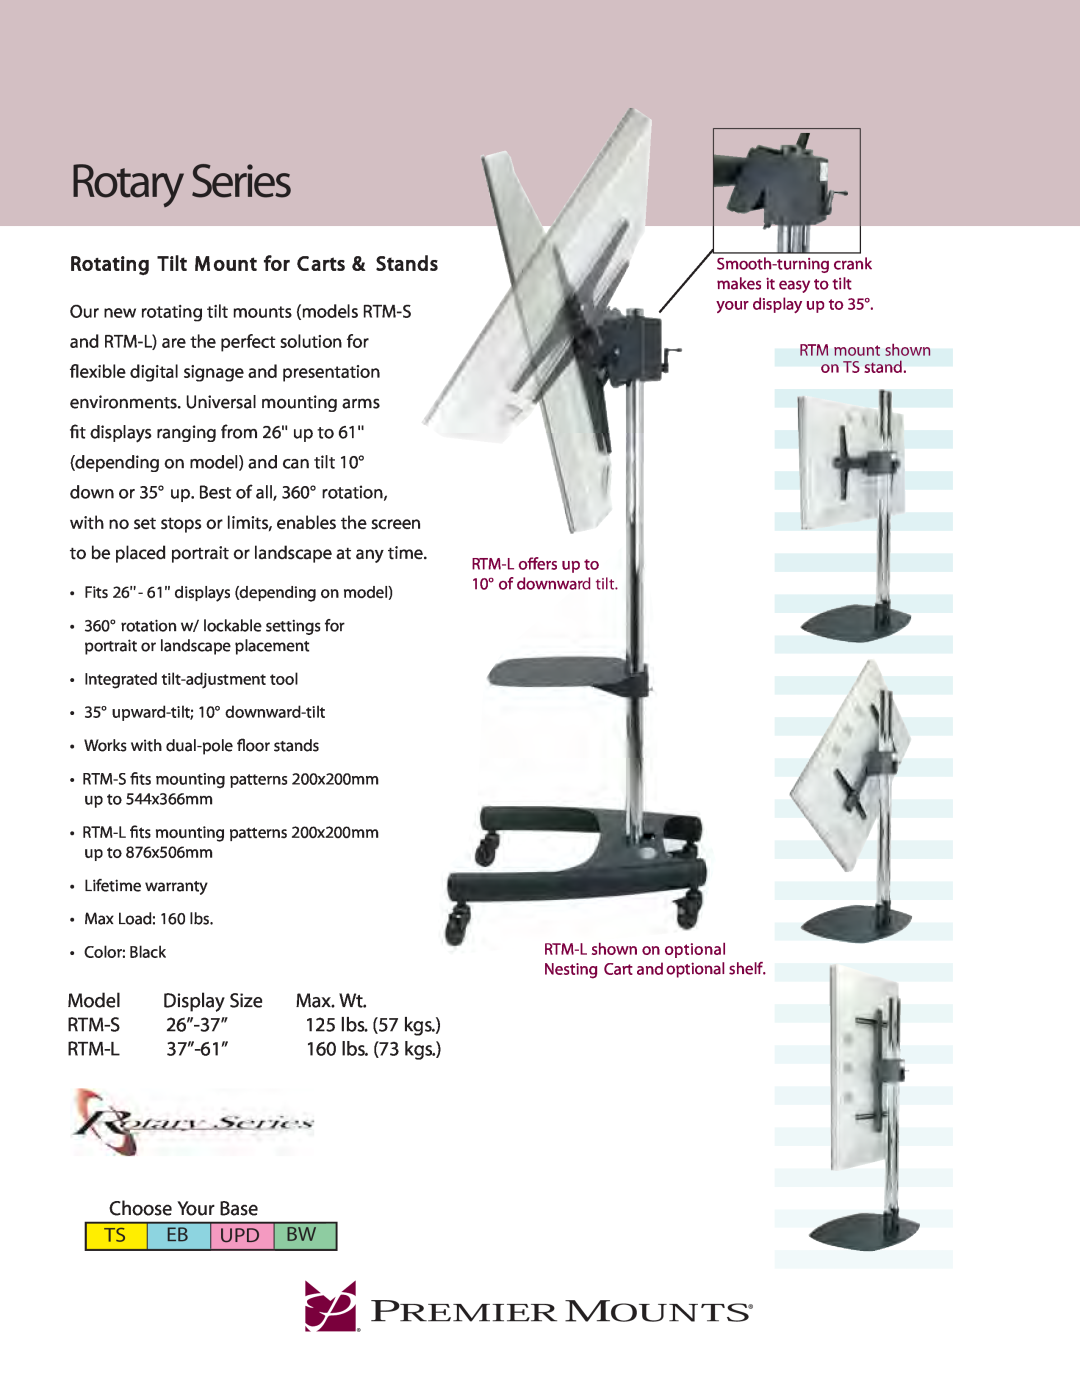 Premier Mounts RTM-S warranty Rotary Series, Rotating Tilt M ount for C arts & Stands, Model, Display Size, Max. Wt, Rtm-S 